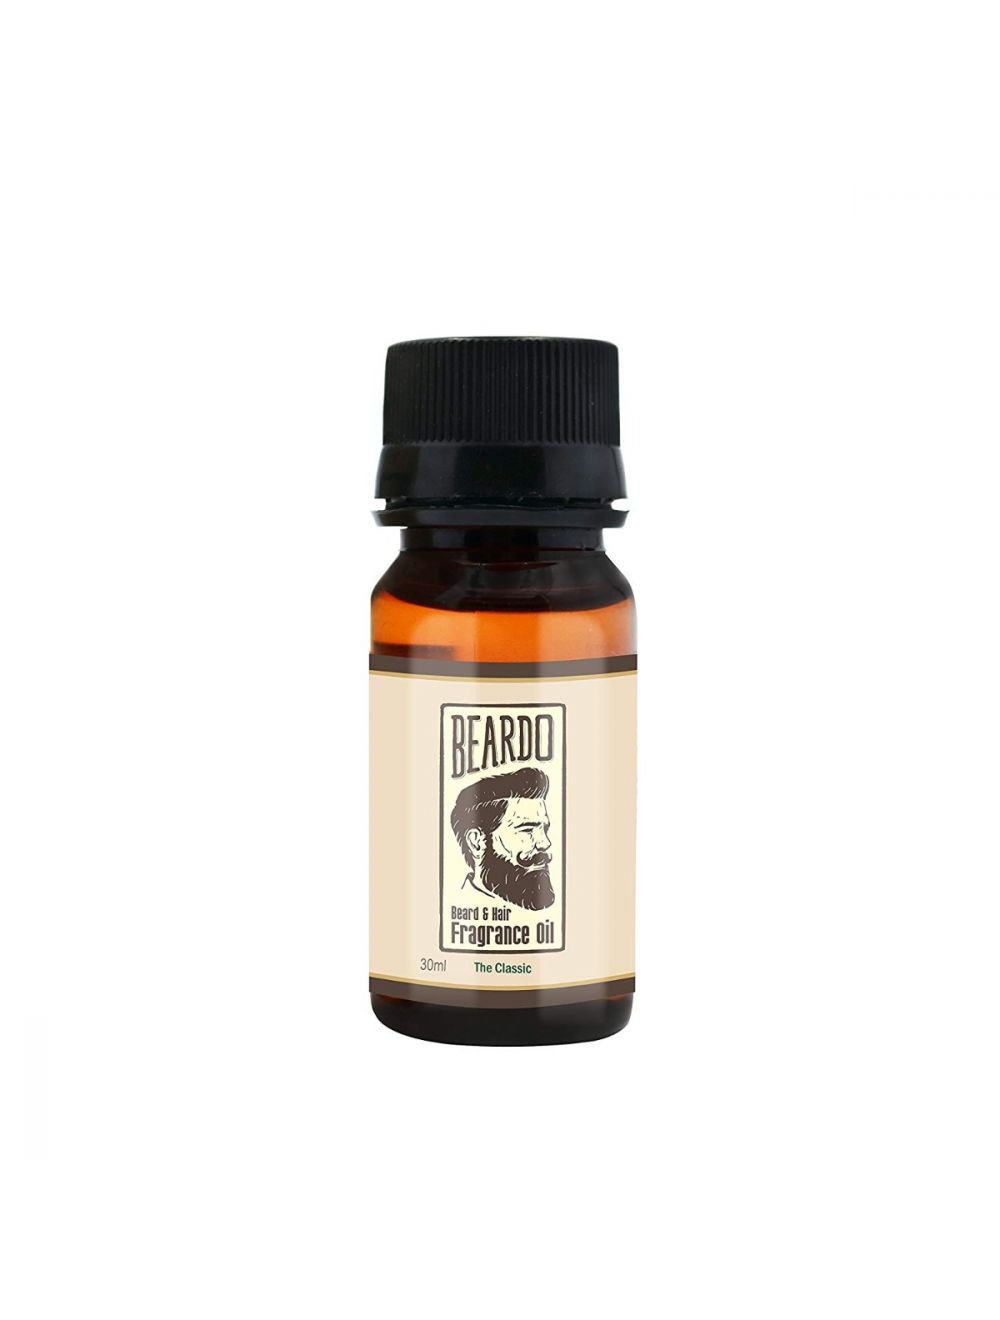 Beardo The Classic Beard and Hair Fragrance Oil-30 ml - Niram